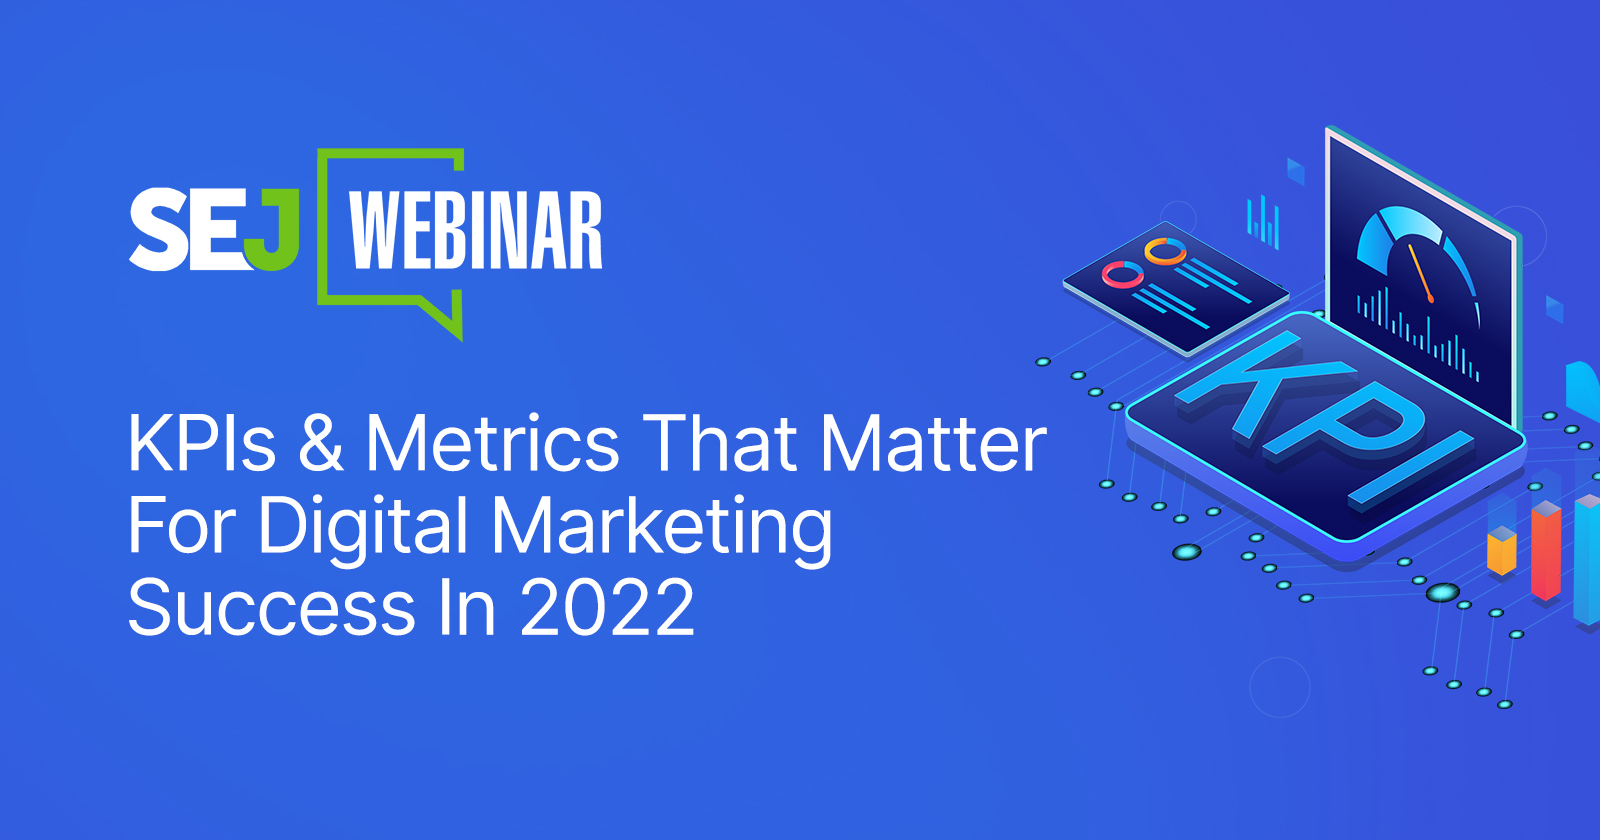 KPIs & Metrics That Matter For 2022 Digital Marketing Success [Webinar] via @sejournal, @hethr_campbell